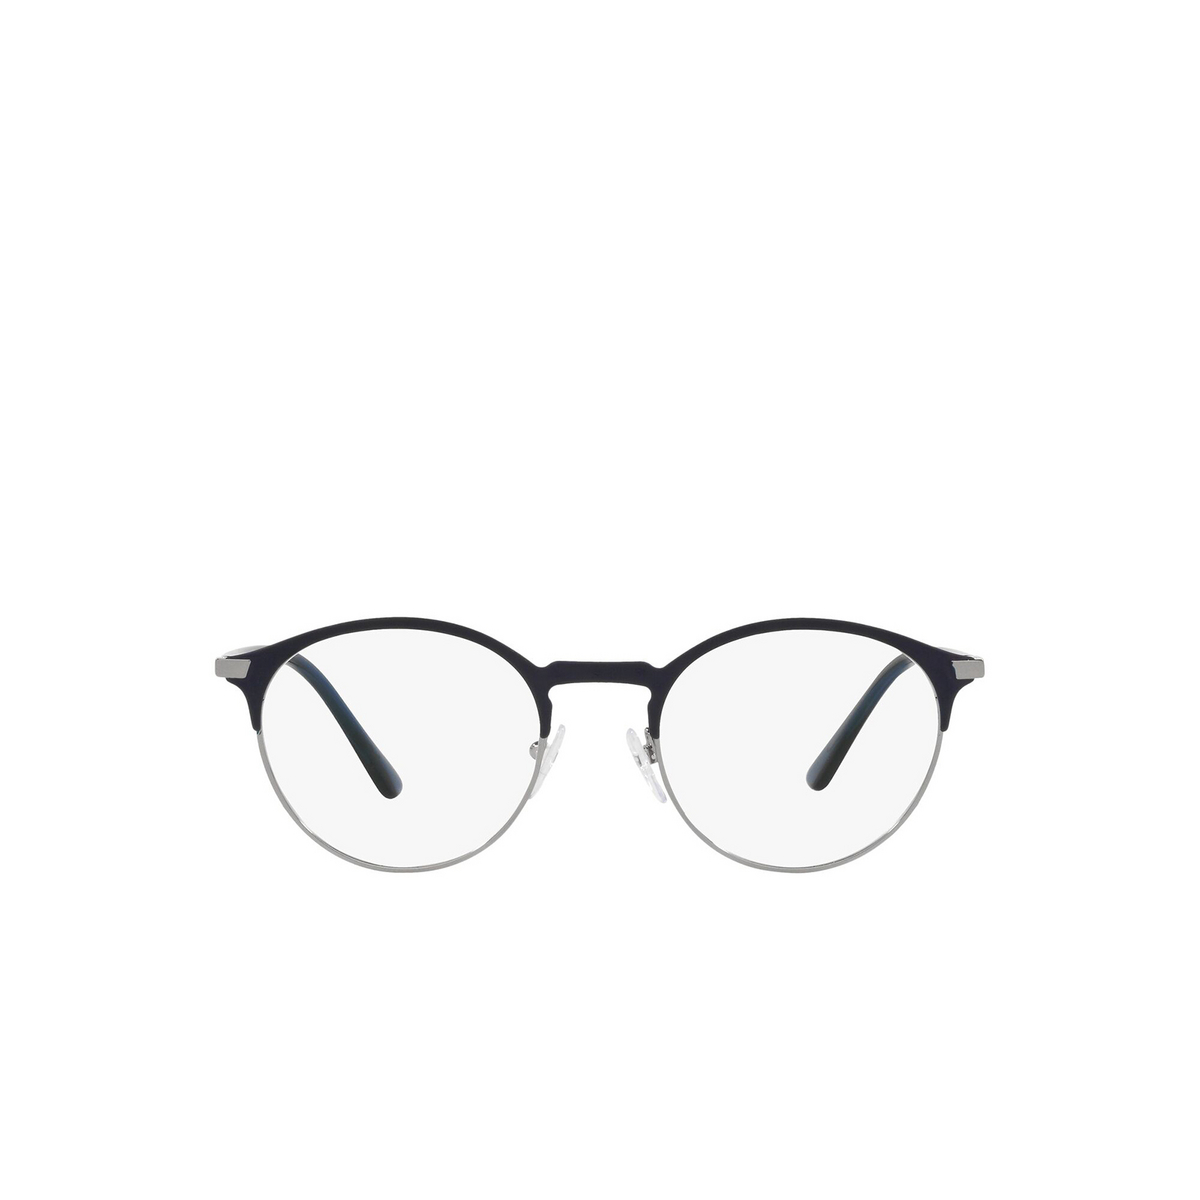 Prada® Round Eyeglasses: PR 58YV color Matte Blue 02N1O1 - front view.